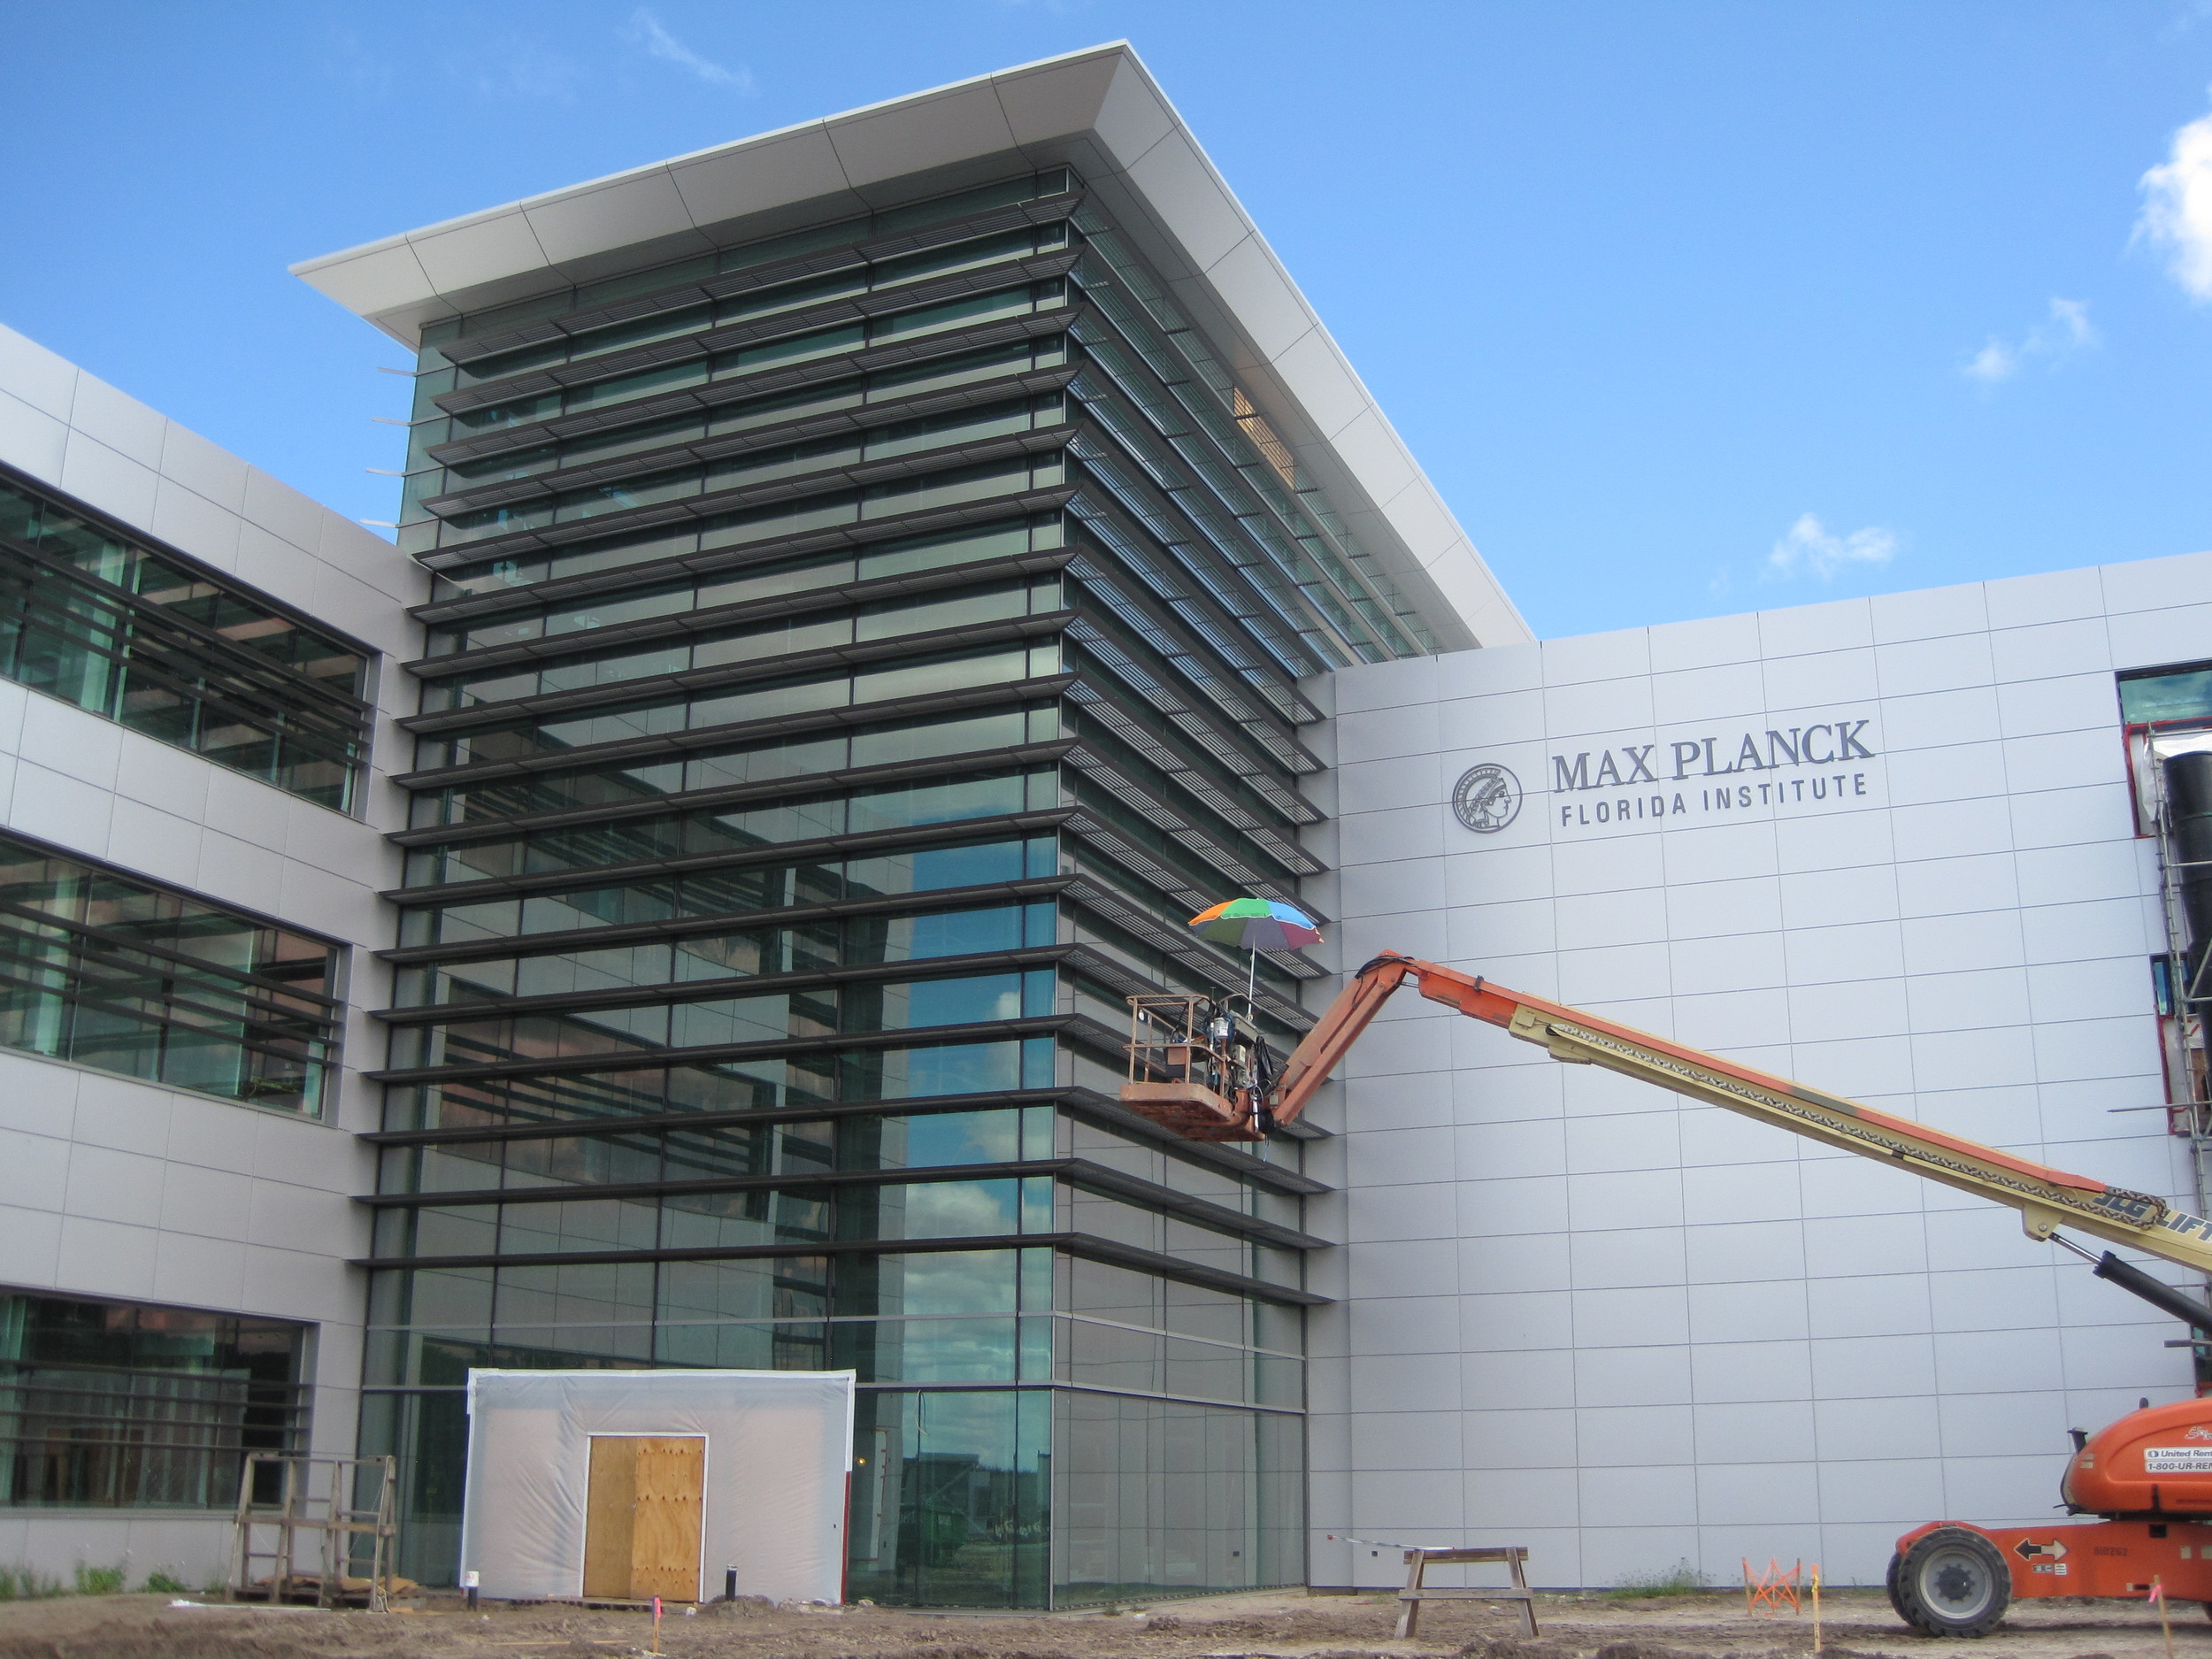 Max Planck  Florida Institute Front Entry Under Construction.jpg